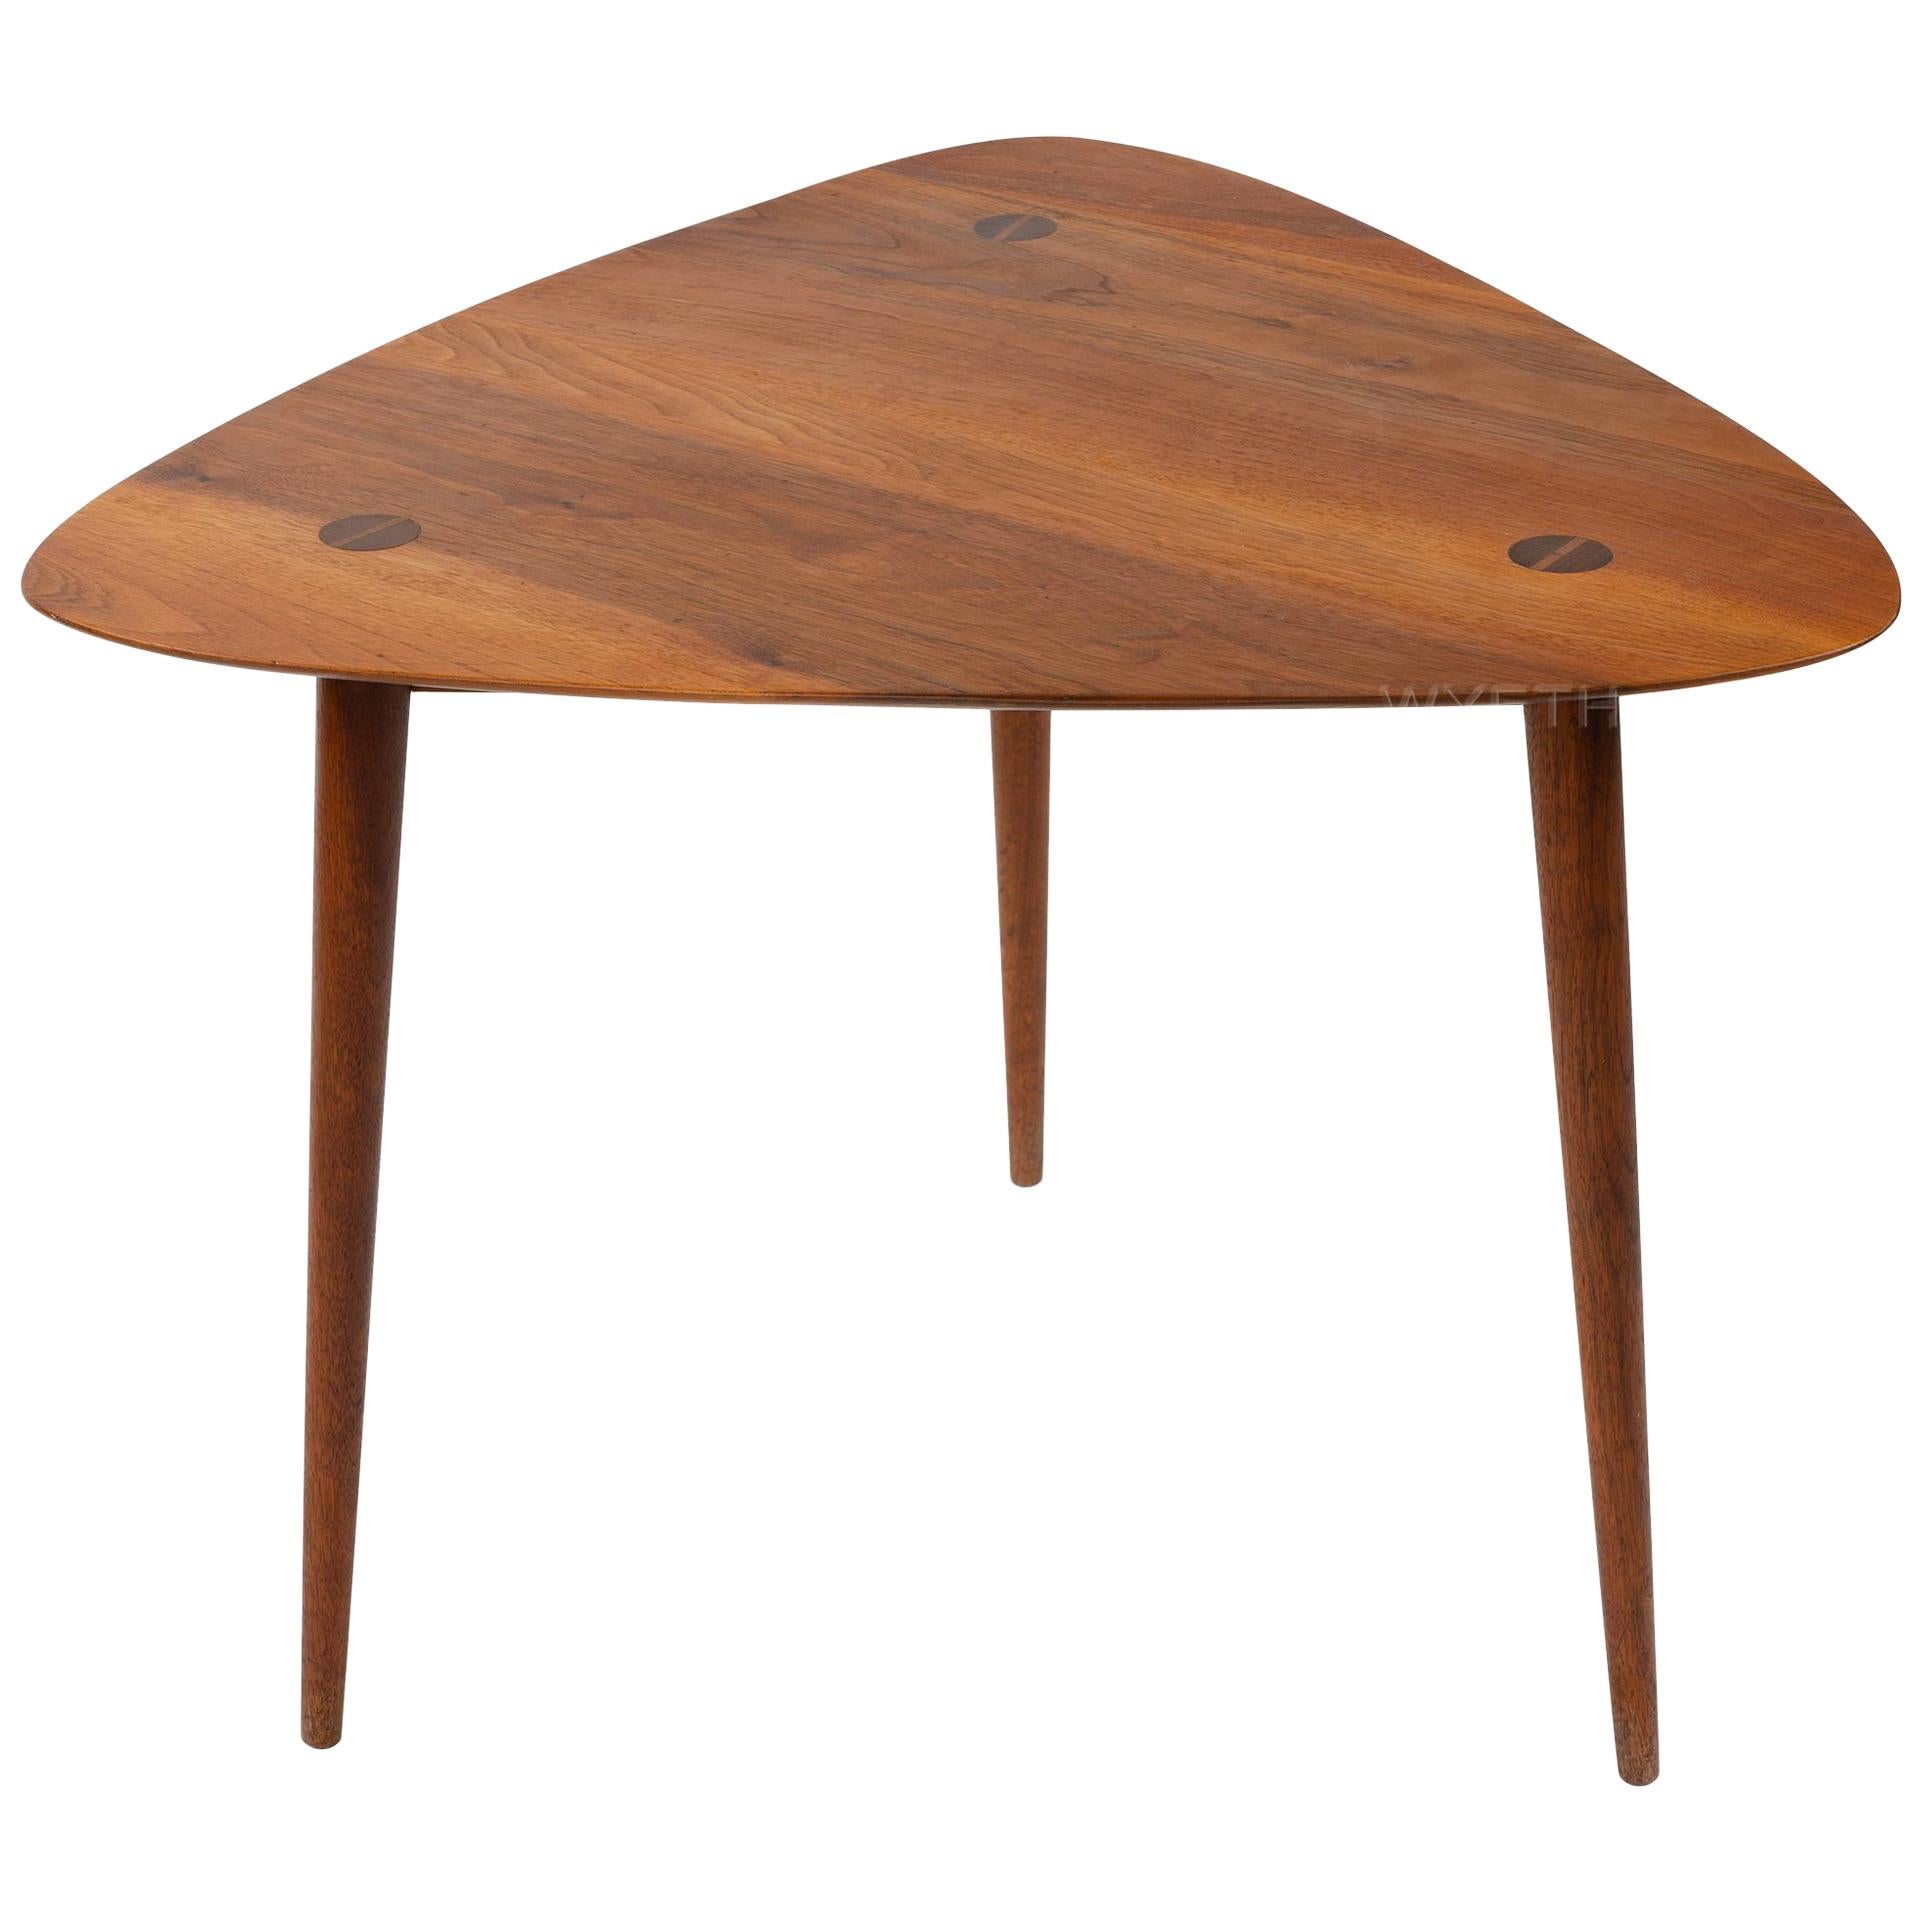 A Solid Walnut Table by Phillip Lloyd Powell